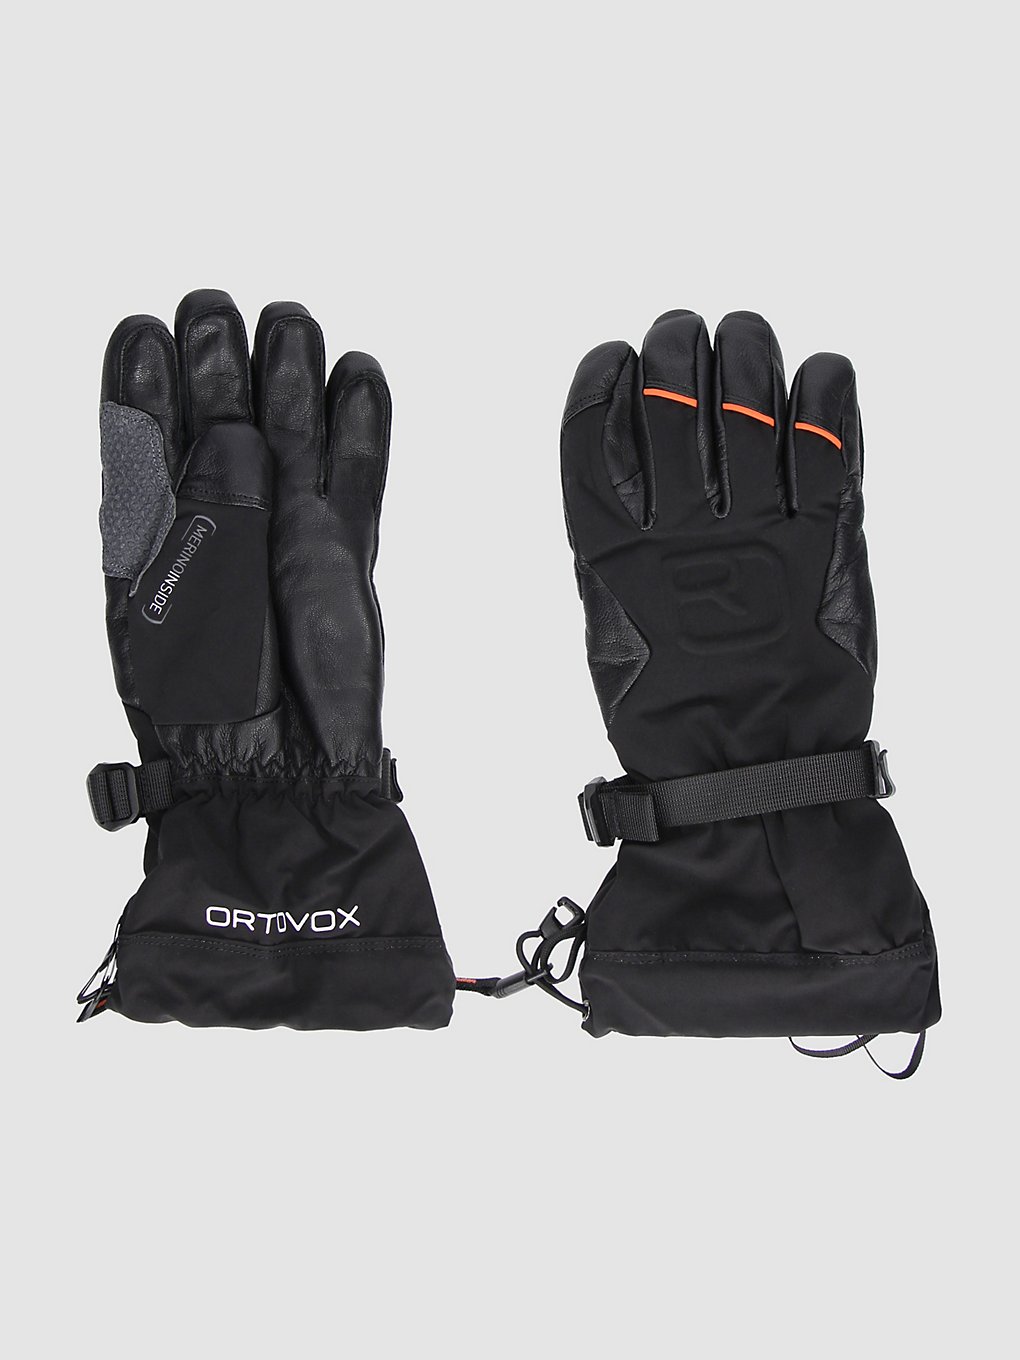 Ortovox Merino Freeride Handschuhe black raven kaufen